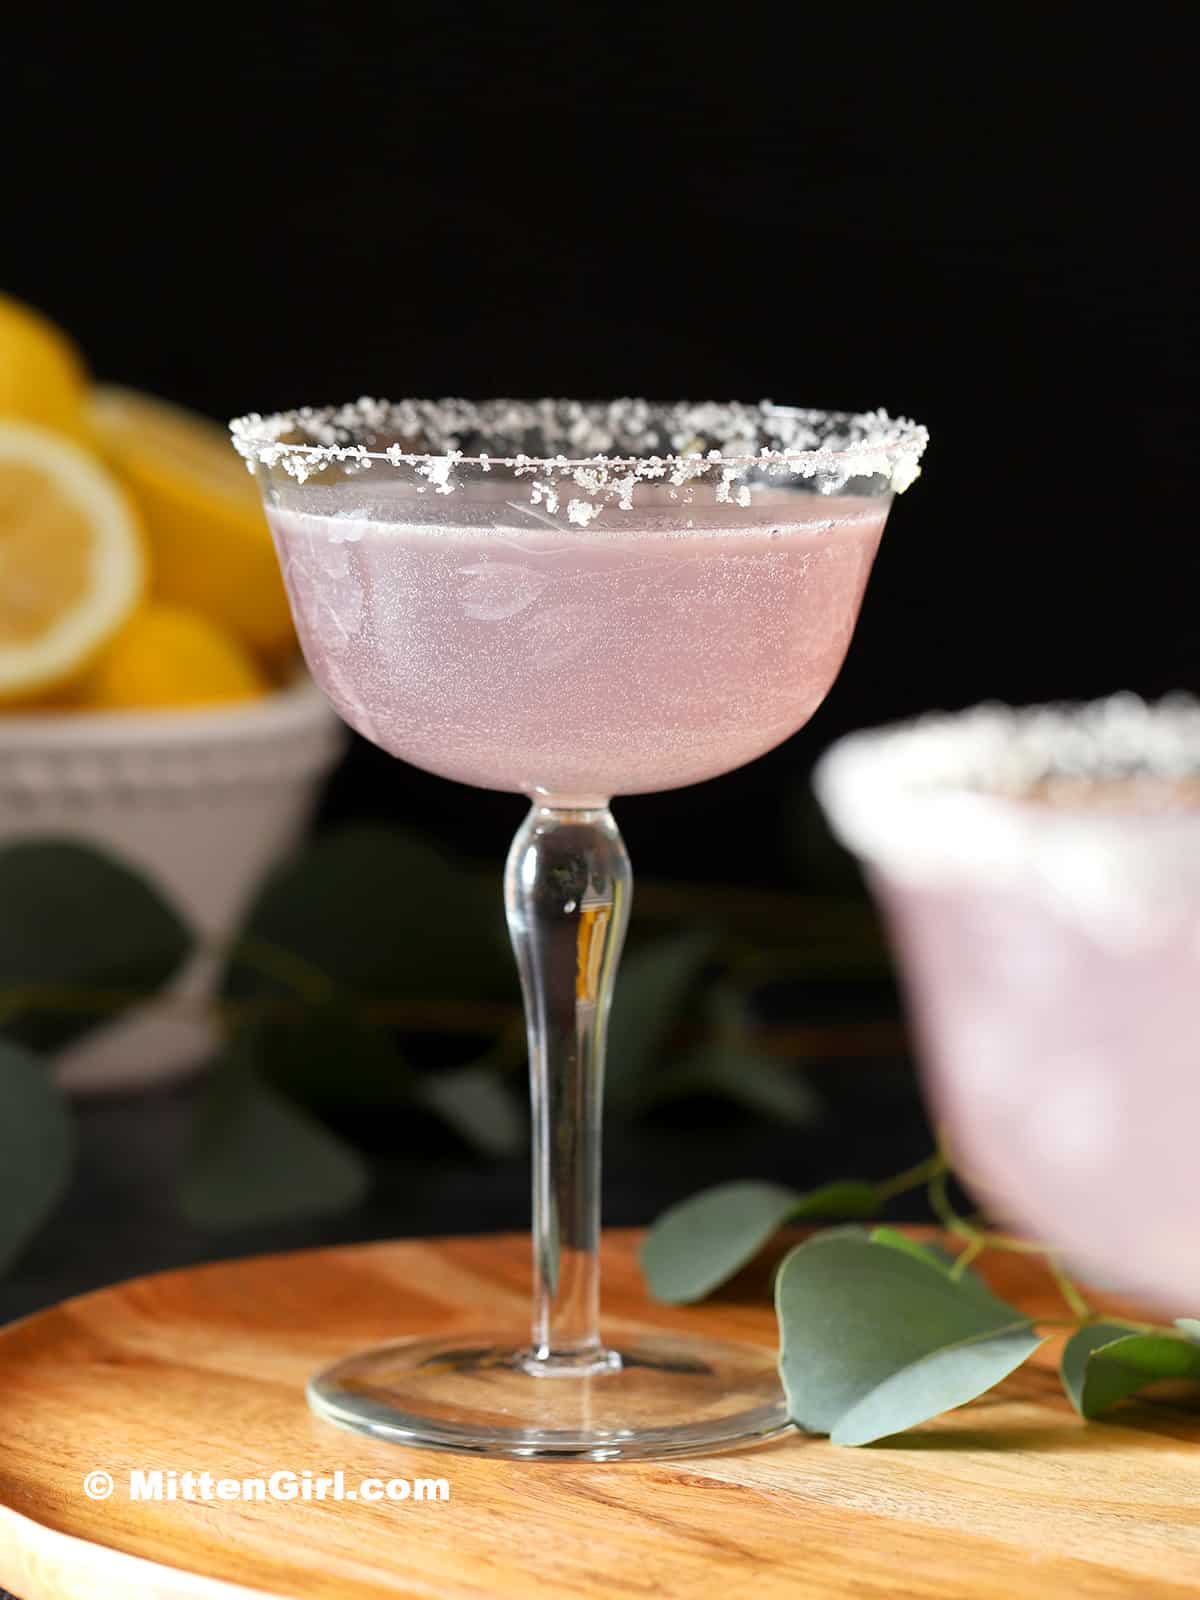 Lavender Lemon Drop Martini